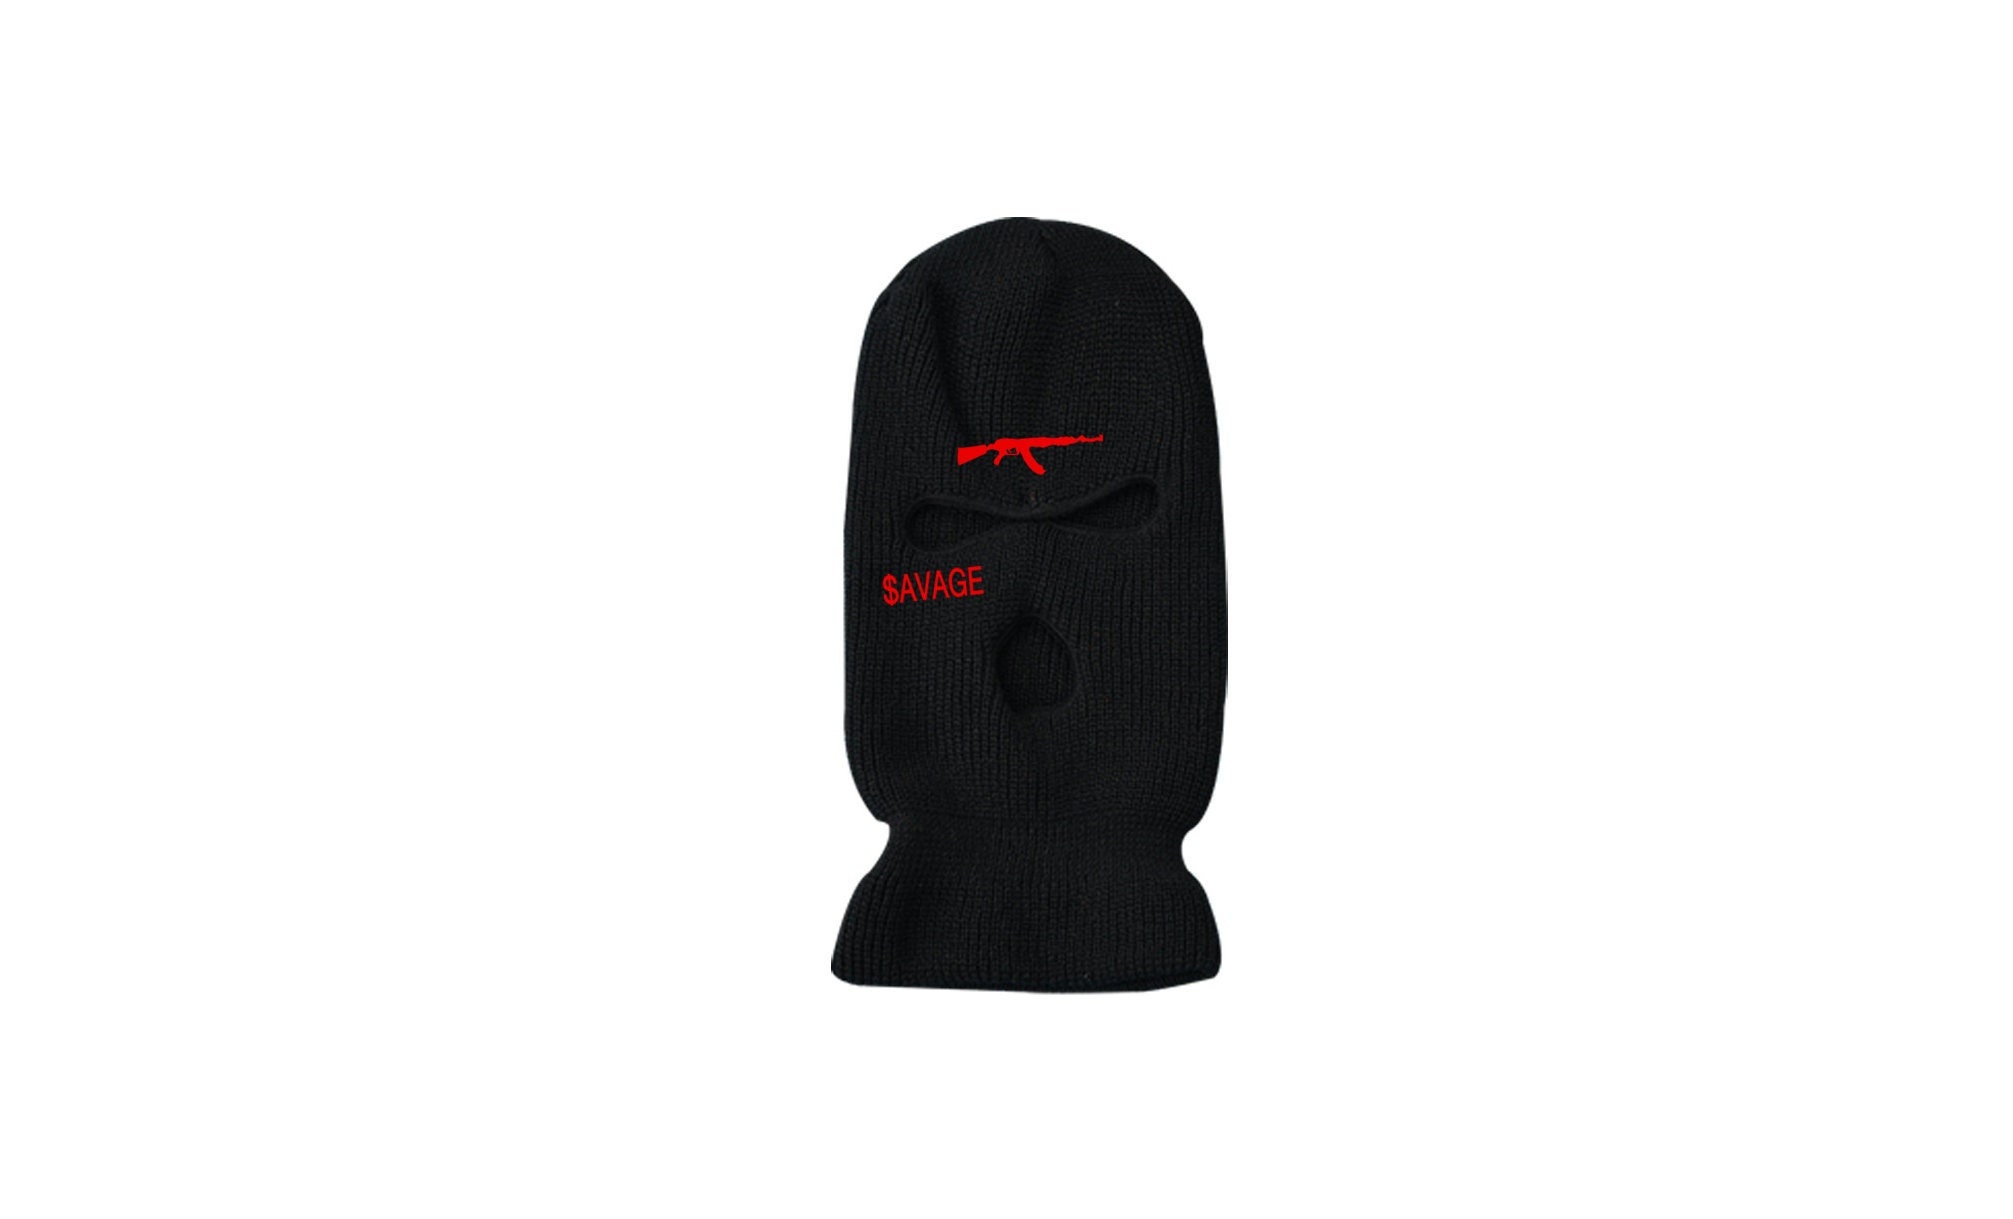 Vlone SKi Mask Black -One size Fits Most